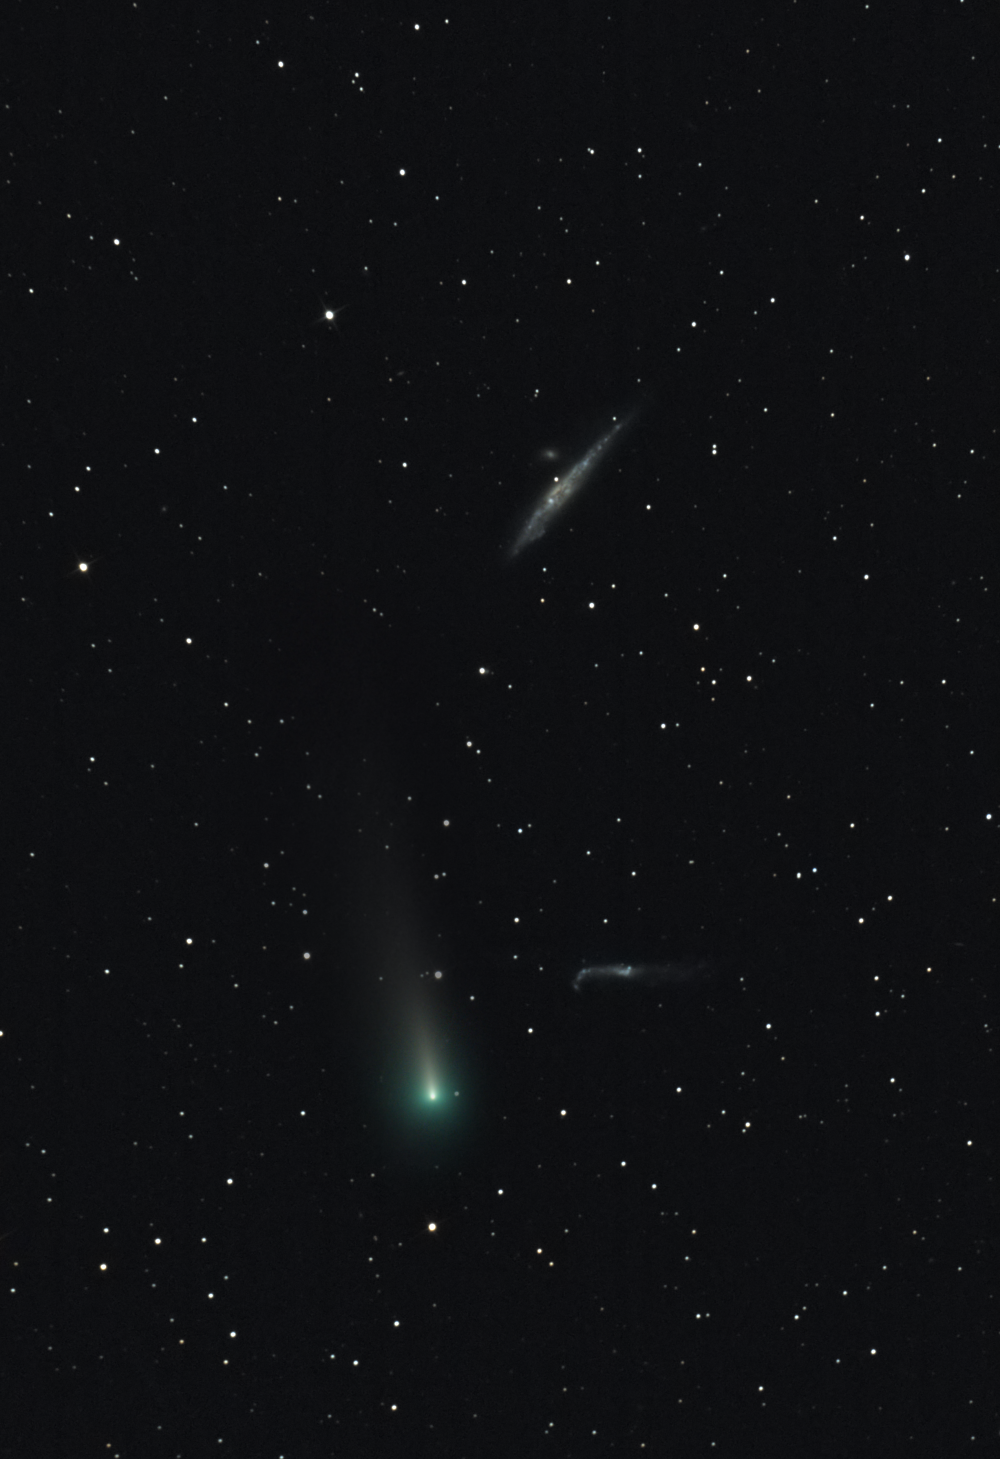 Комета С2021 А1 (Leonard) на фоне галактик NGC 4627 (галактика "Кит") и NGC 4656 (галактика "Лом") в созвездии Гончих Псов.